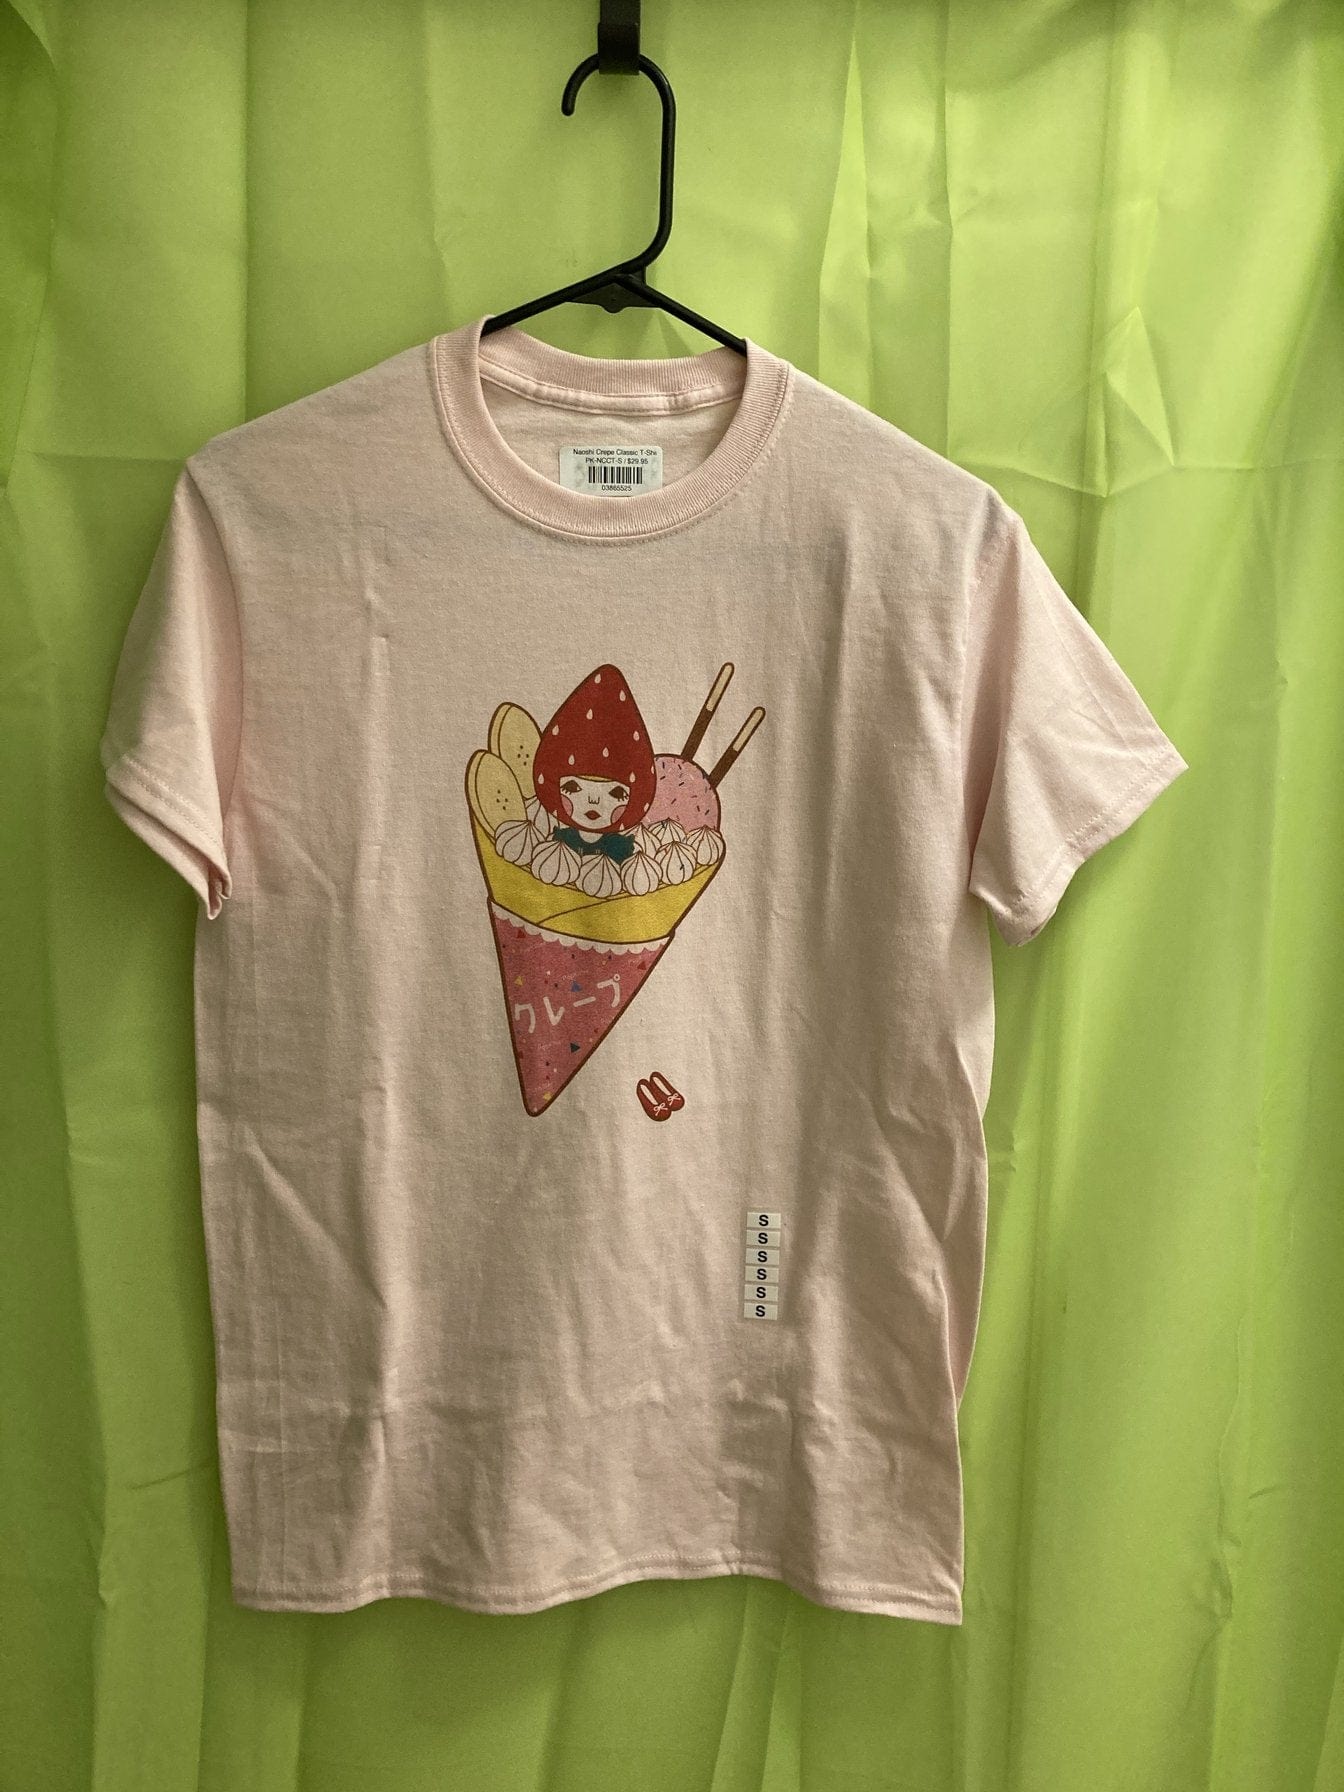 PopKiller Naoshi Crepe Classic T-Shirt Kawaii Gifts